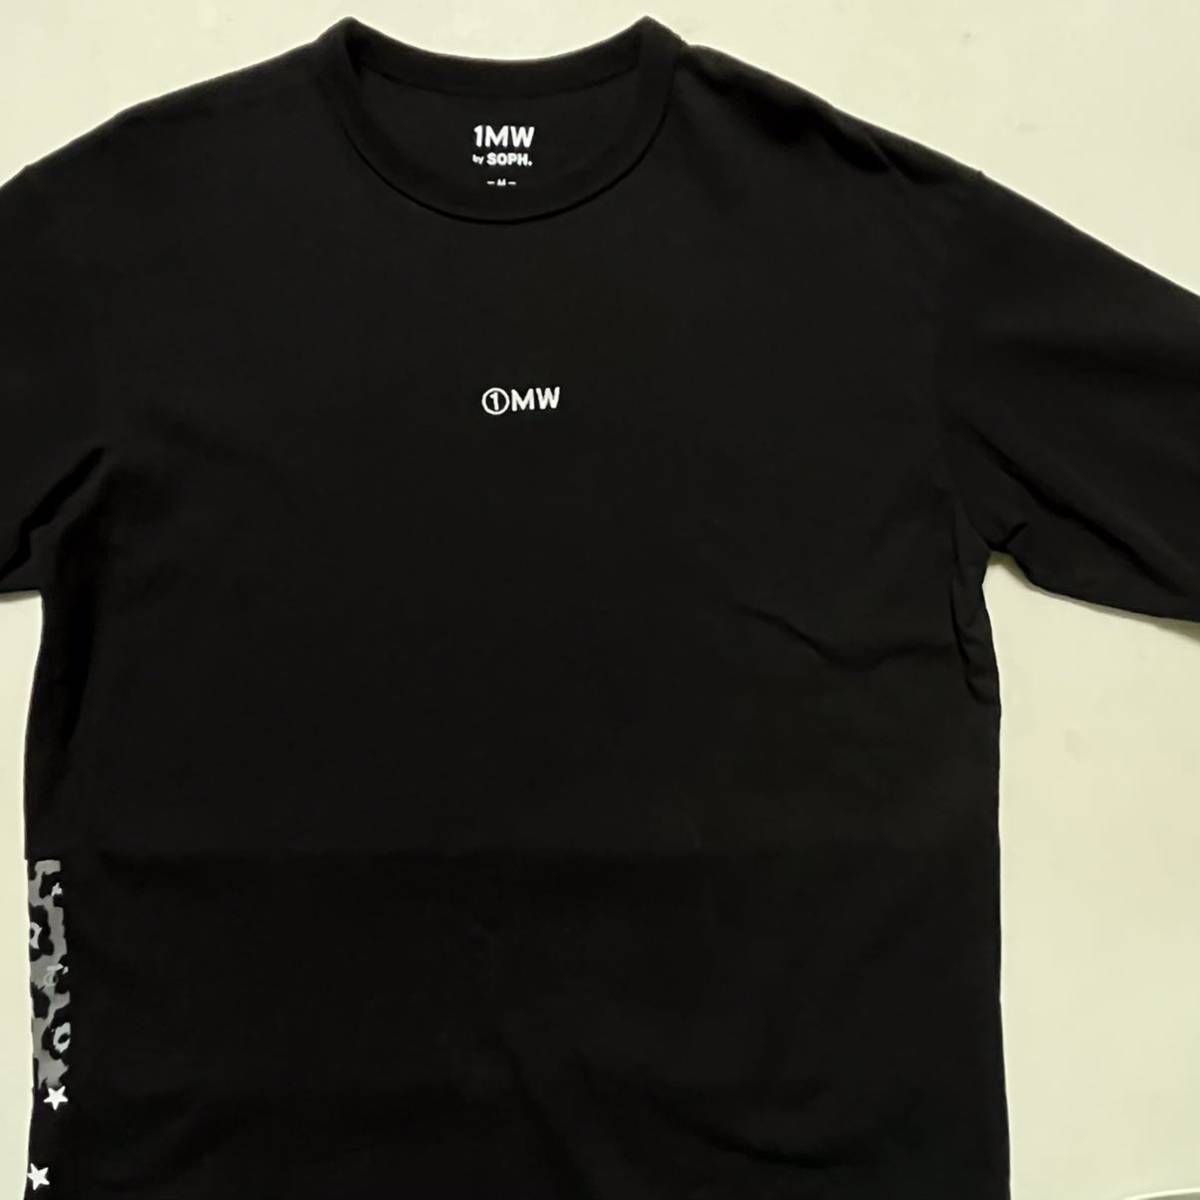 GU ソフ コラボ 1MW by SOPH. Tシャツ 黒 + 総柄 M 美品 管理B1435_画像3